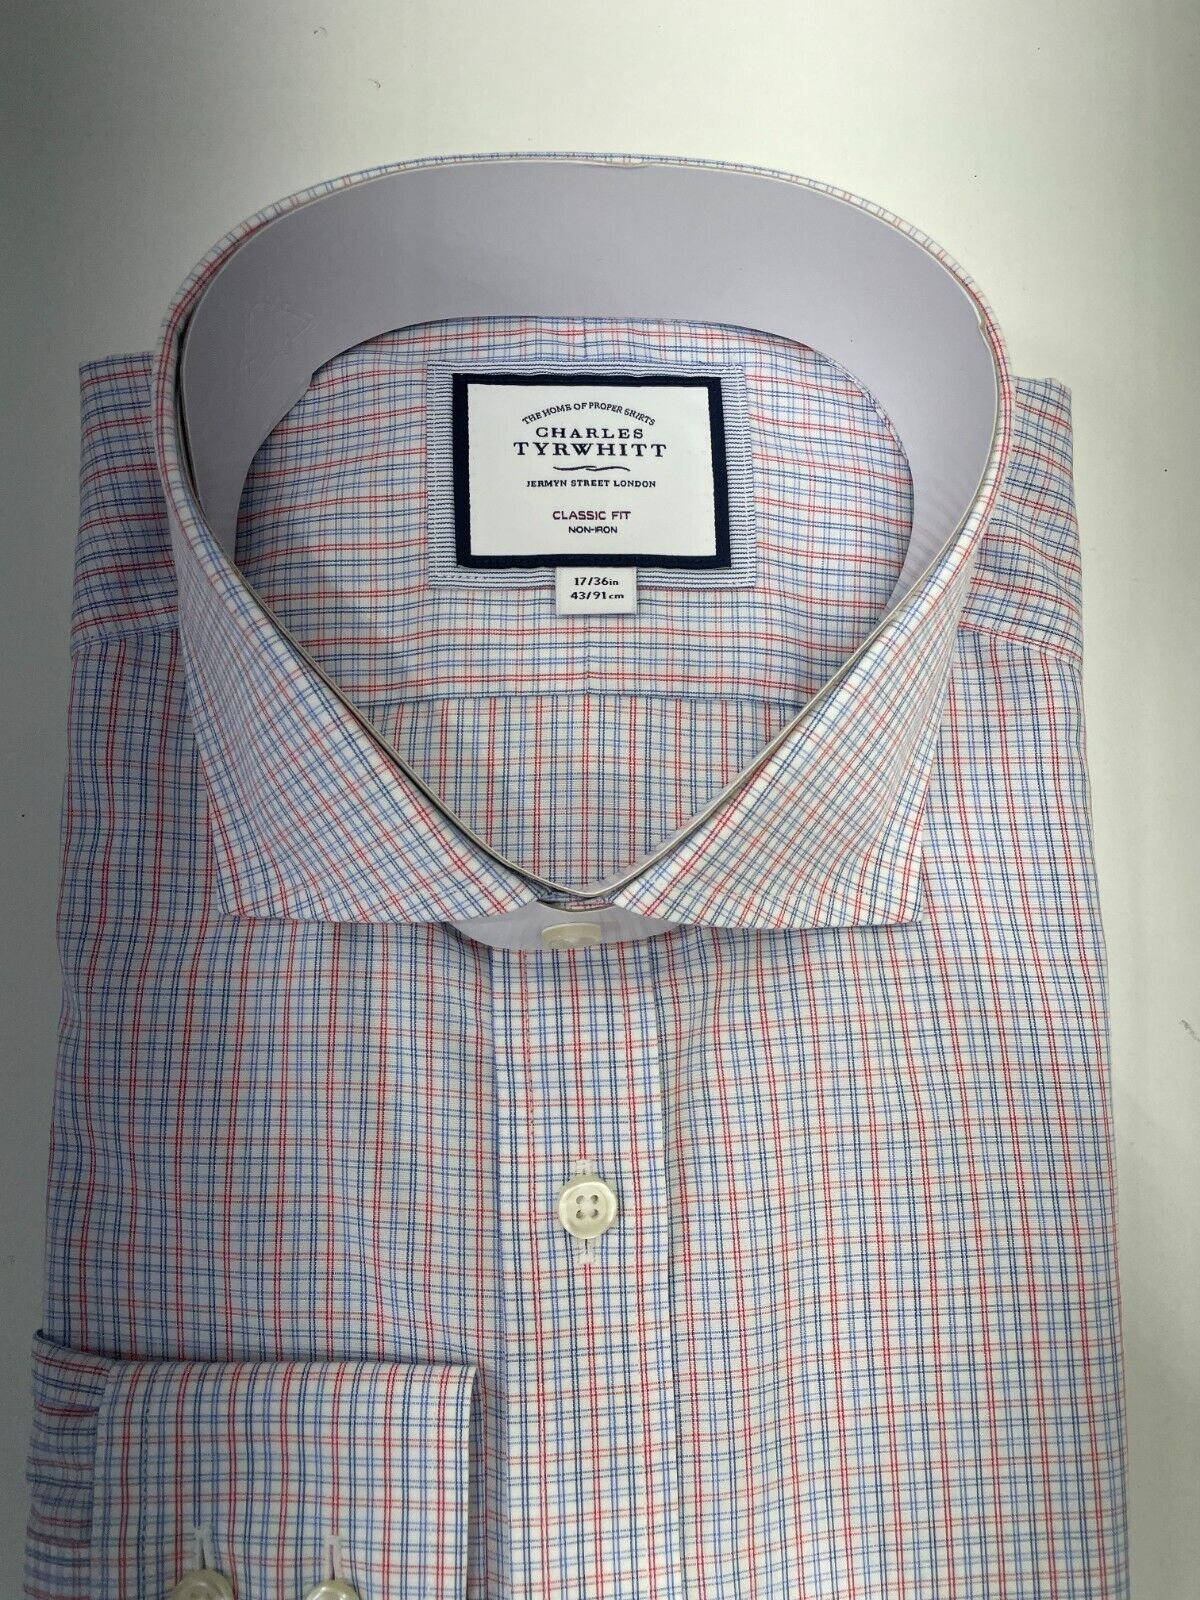 Charles Tyrwhitt Mens 17/36 Cutaway Collar Classic Fine Line Check Dress Shirt